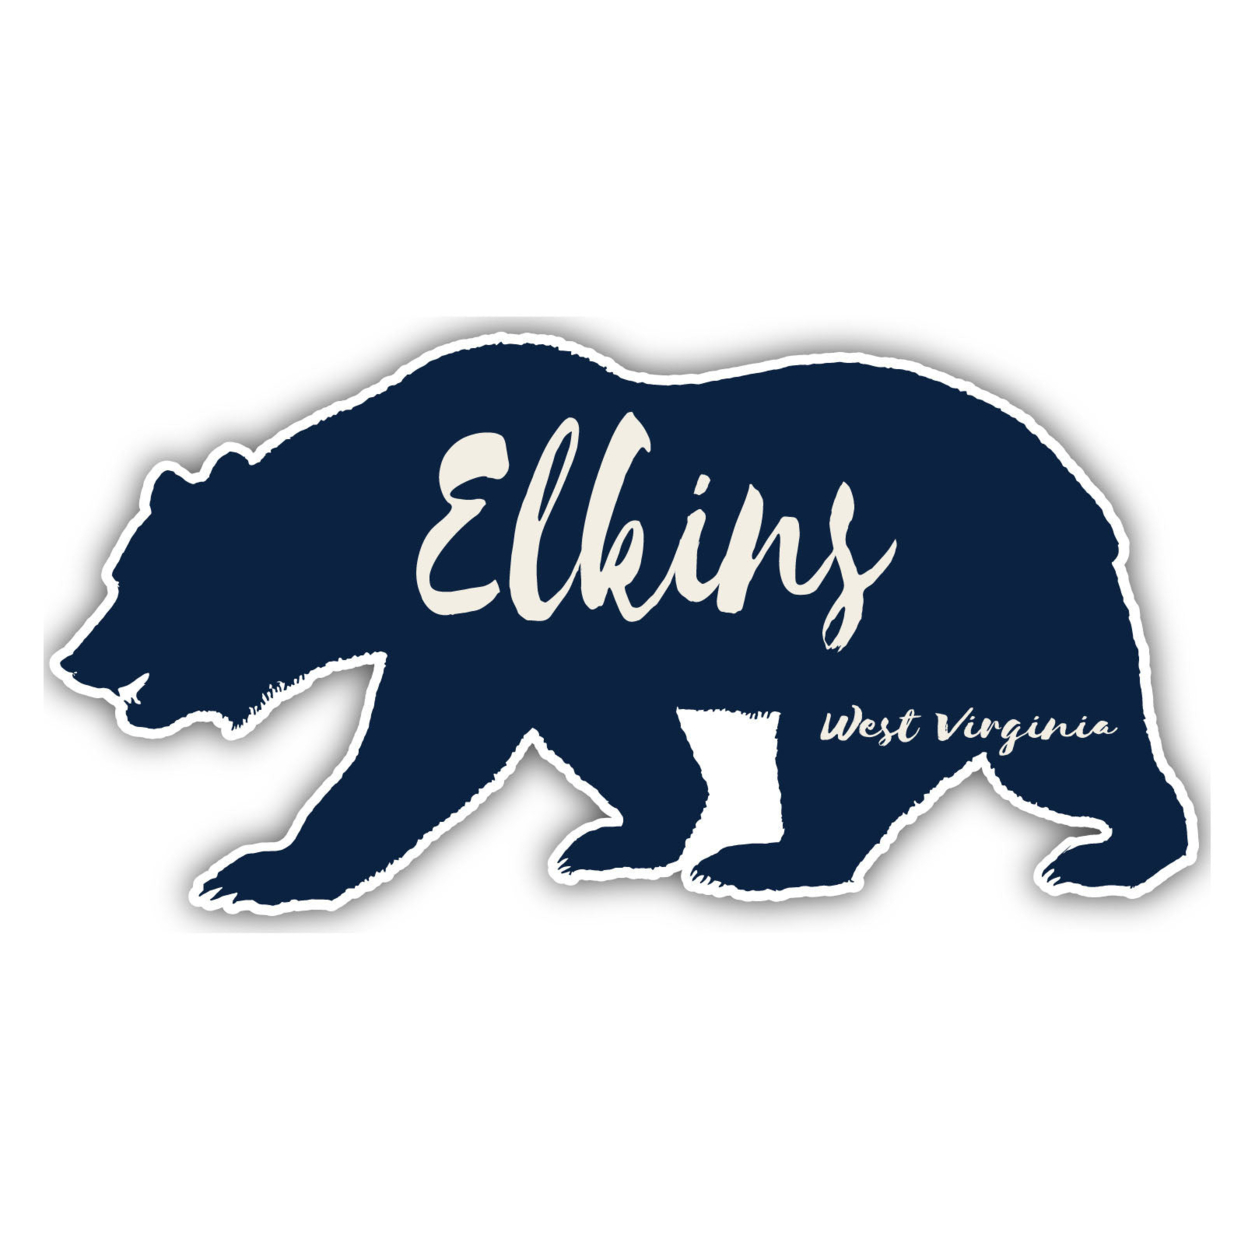 Elkins West Virginia Souvenir Decorative Stickers (Choose Theme And Size) - 4-Pack, 12-Inch, Tent